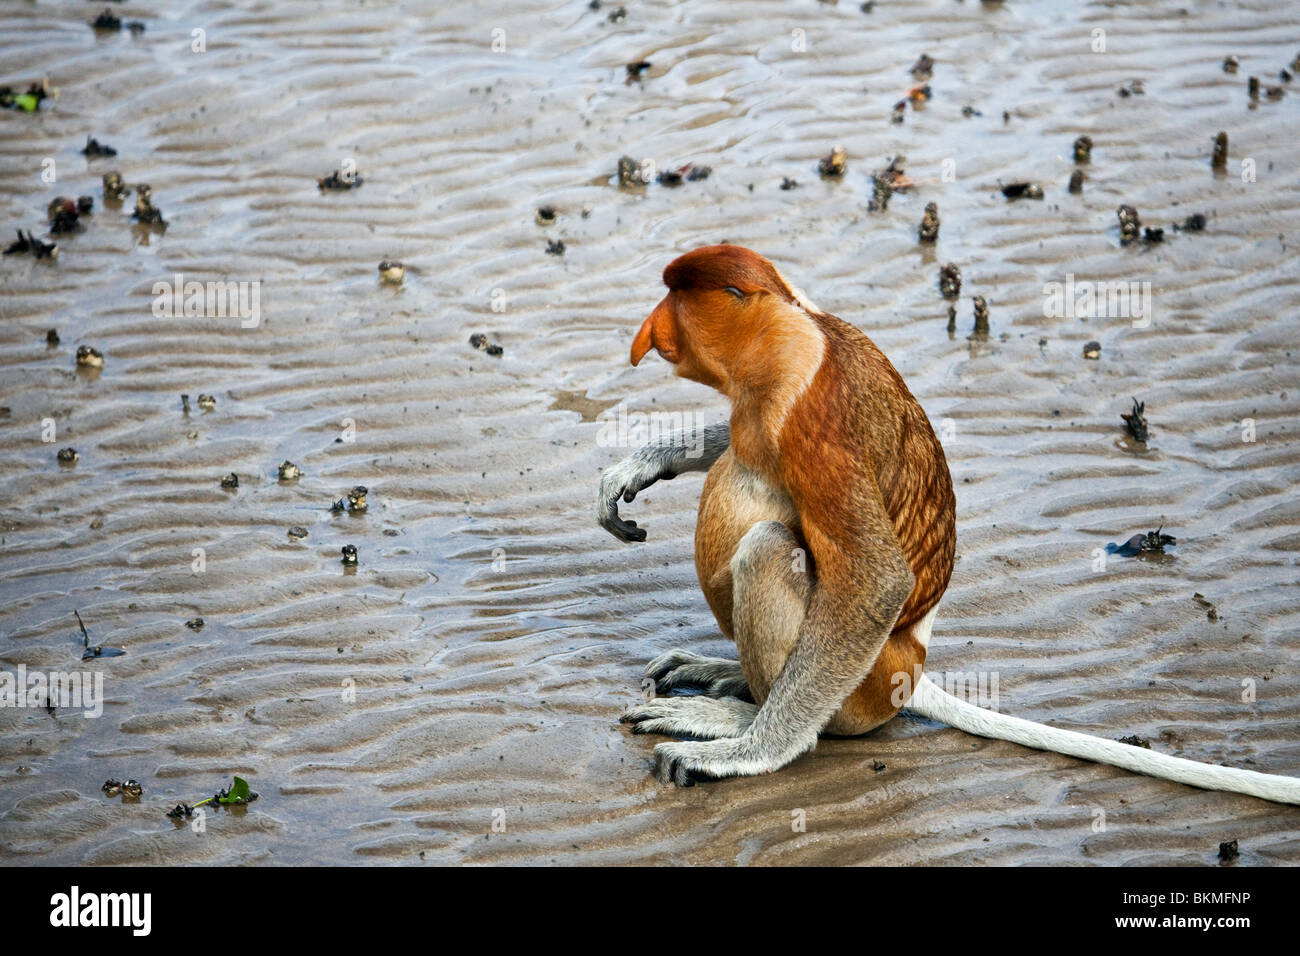 Proboscis monkey (Nasalis larvatus) sitting on mangrove mudflats in Bako National Park. Kuching, Sarawak, Borneo, Malaysia. Stock Photo